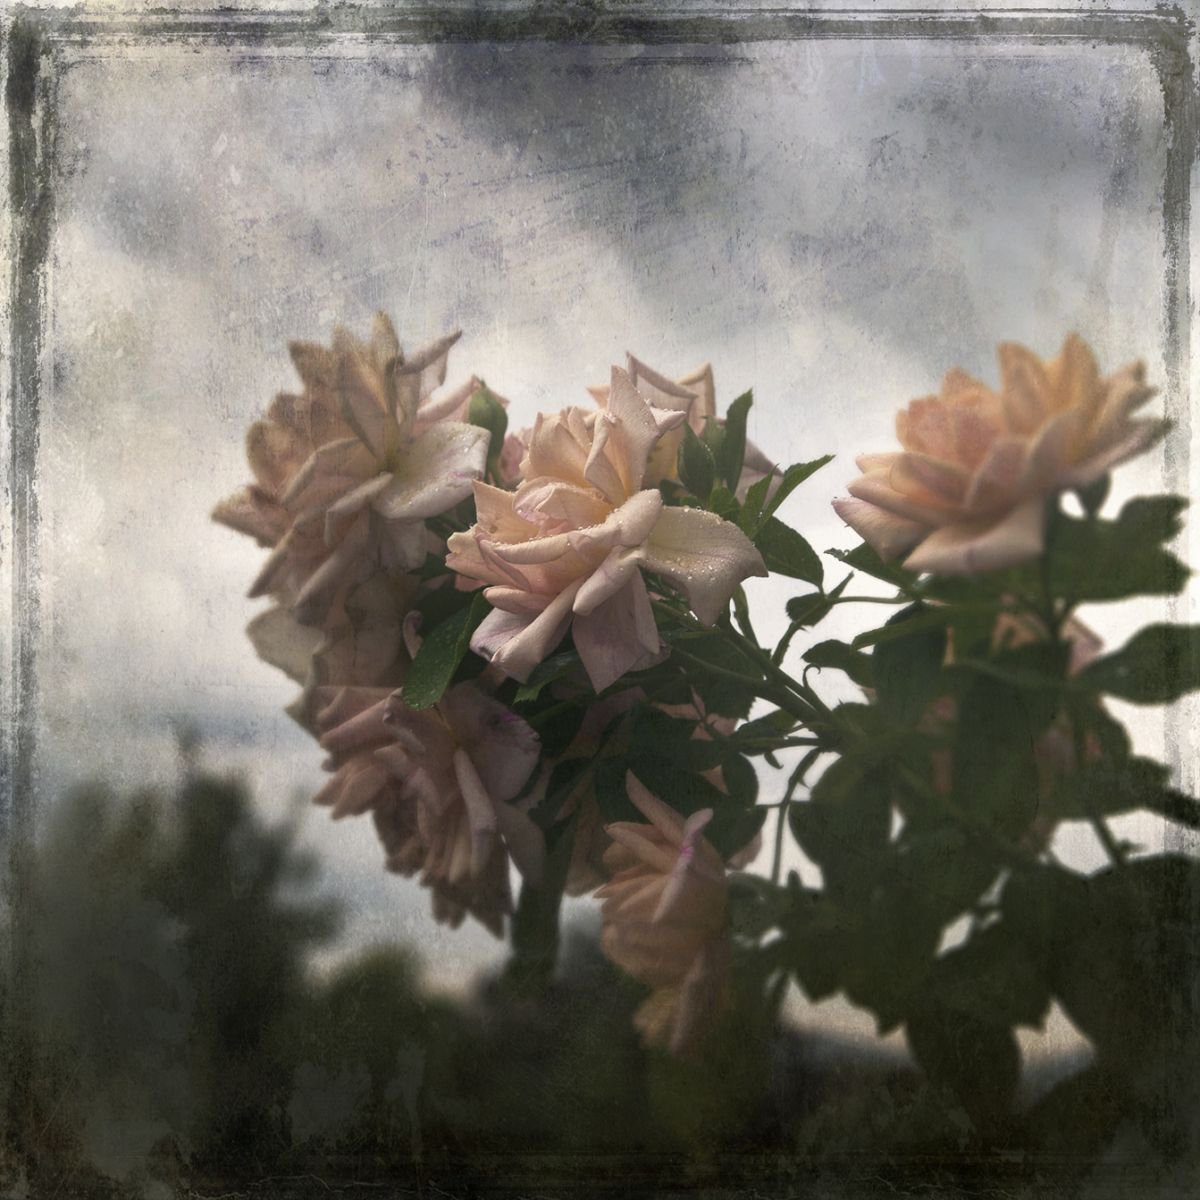 Roses by Chiara Vignudelli